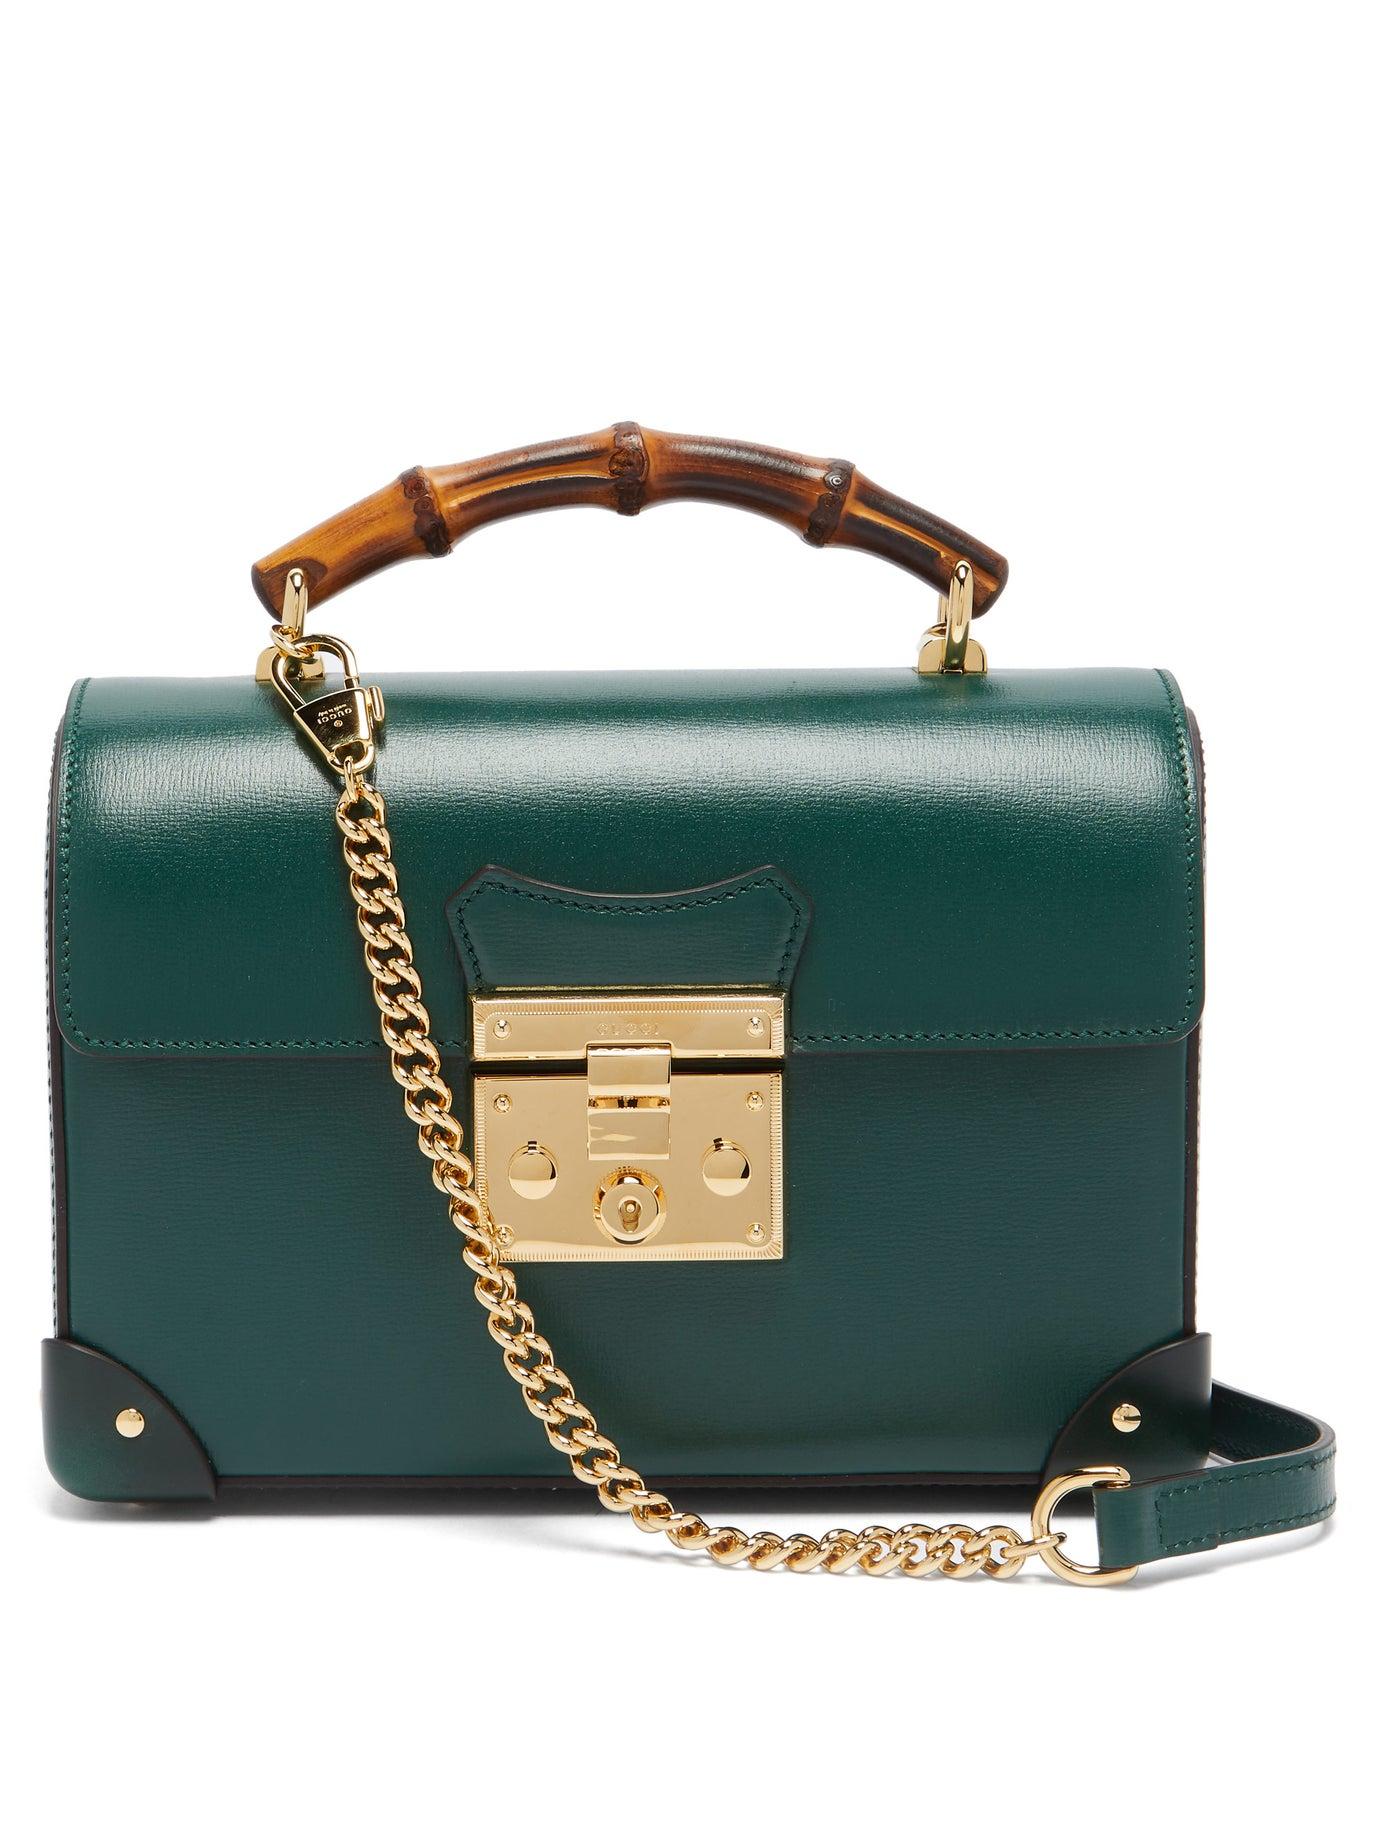 Gucci Padlock Bamboo-handle Leather Handbag in Green | Lyst